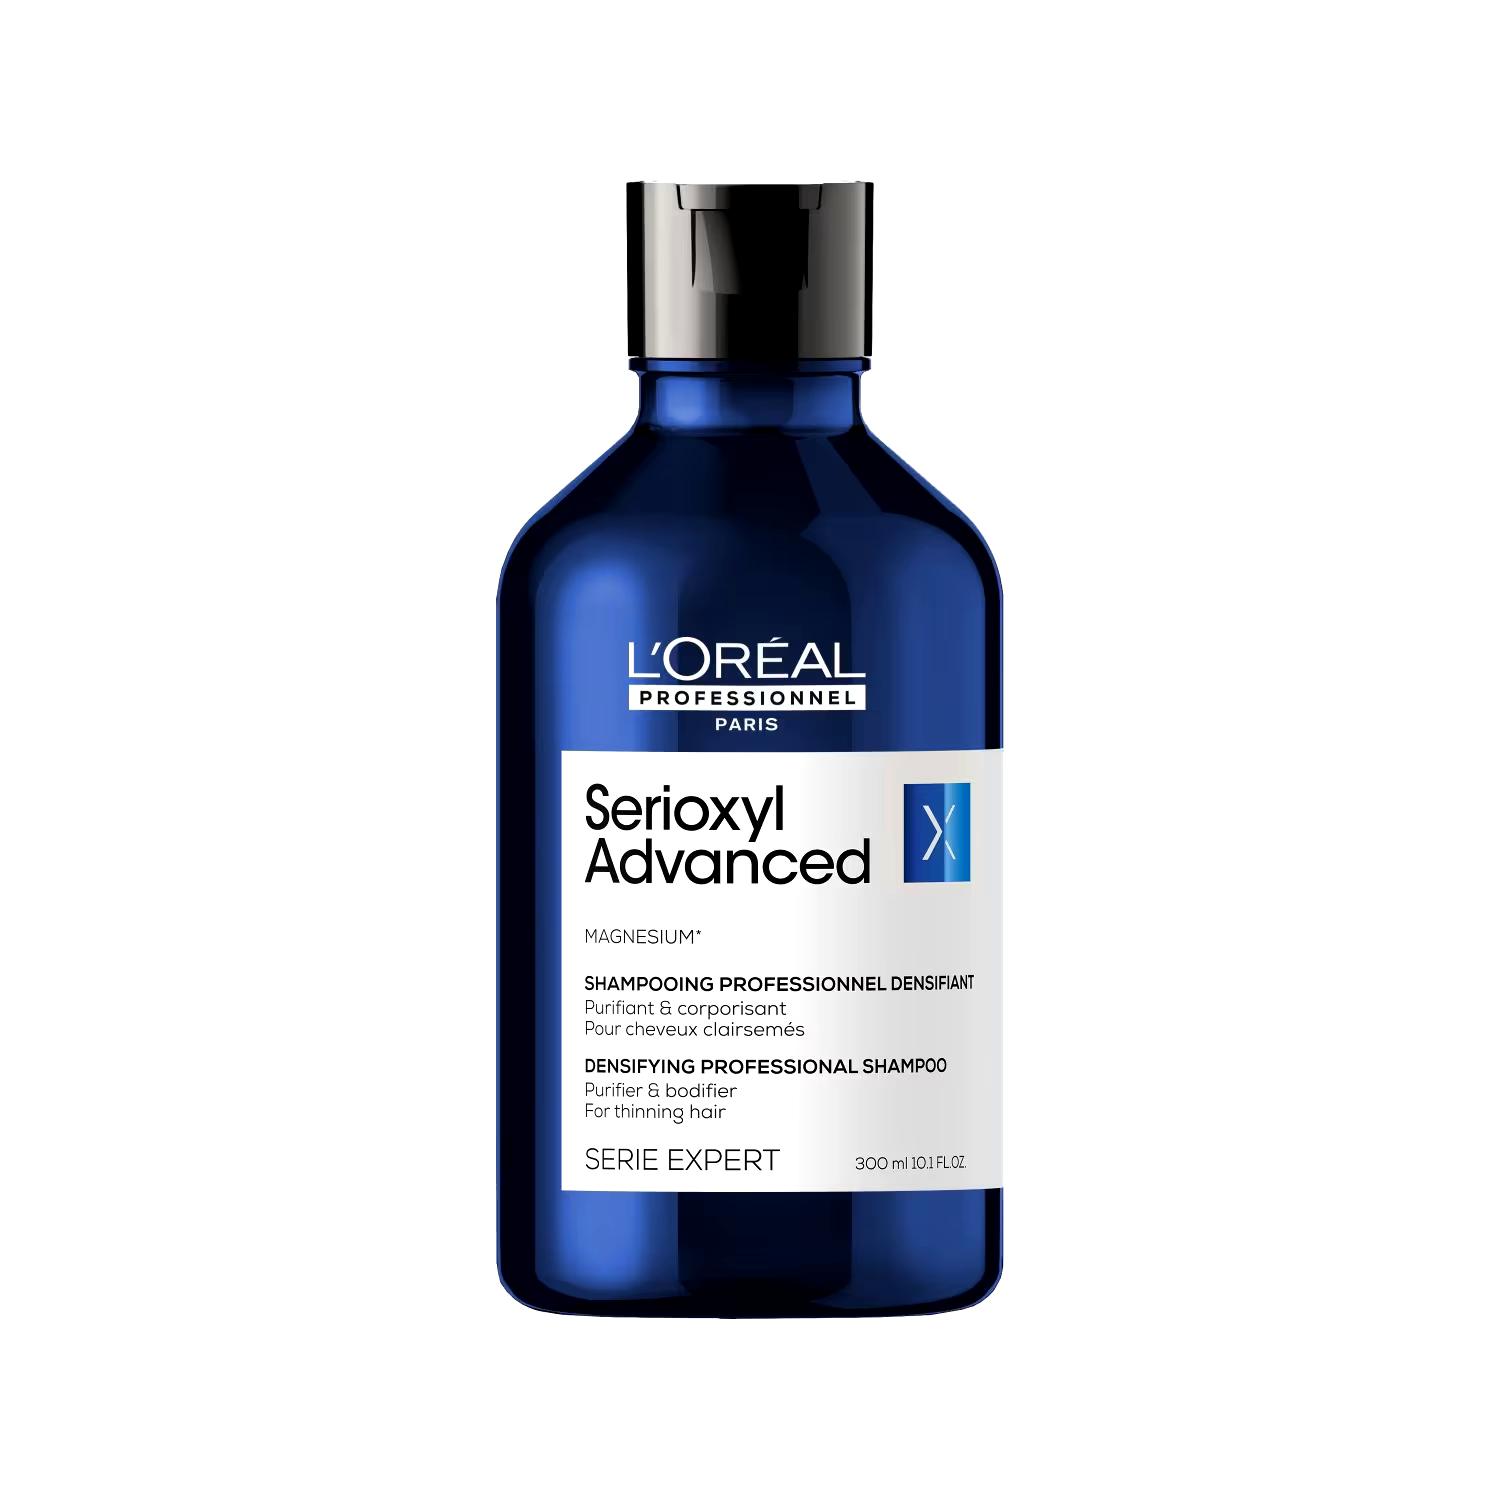 Serie Expert Serioxyl Advanced Purifier & Bodifier against hair loss